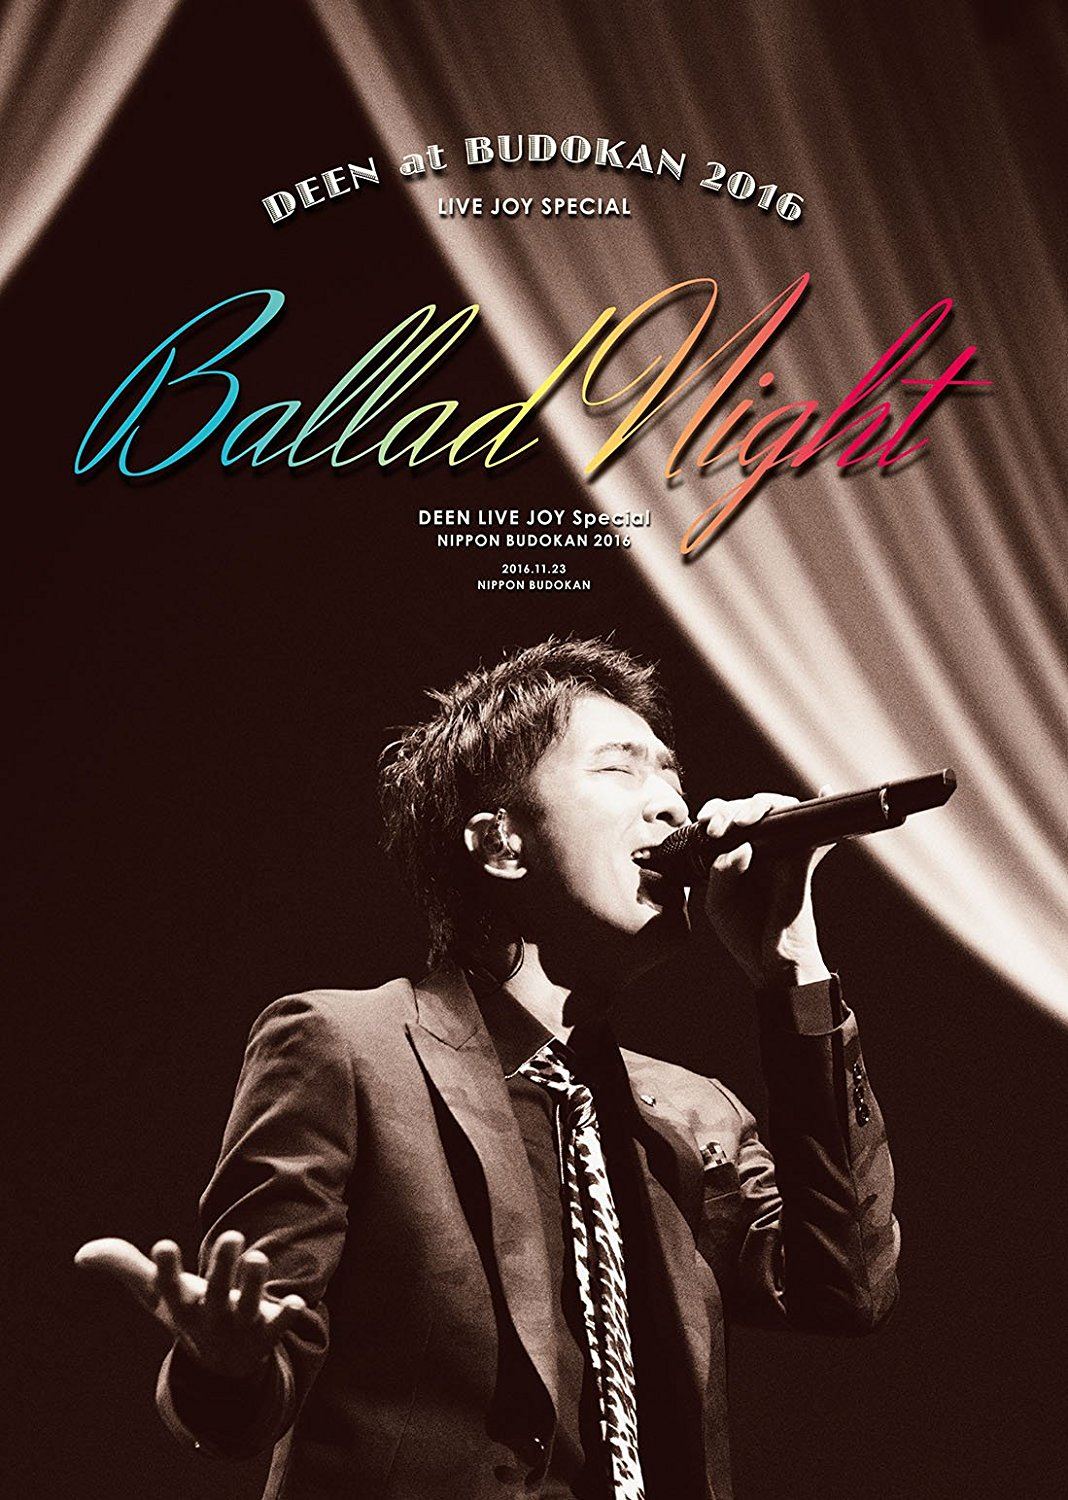 Deen At Budokan 2016 Live Joy Special - Ballad Night [Blu-ray+2CD 